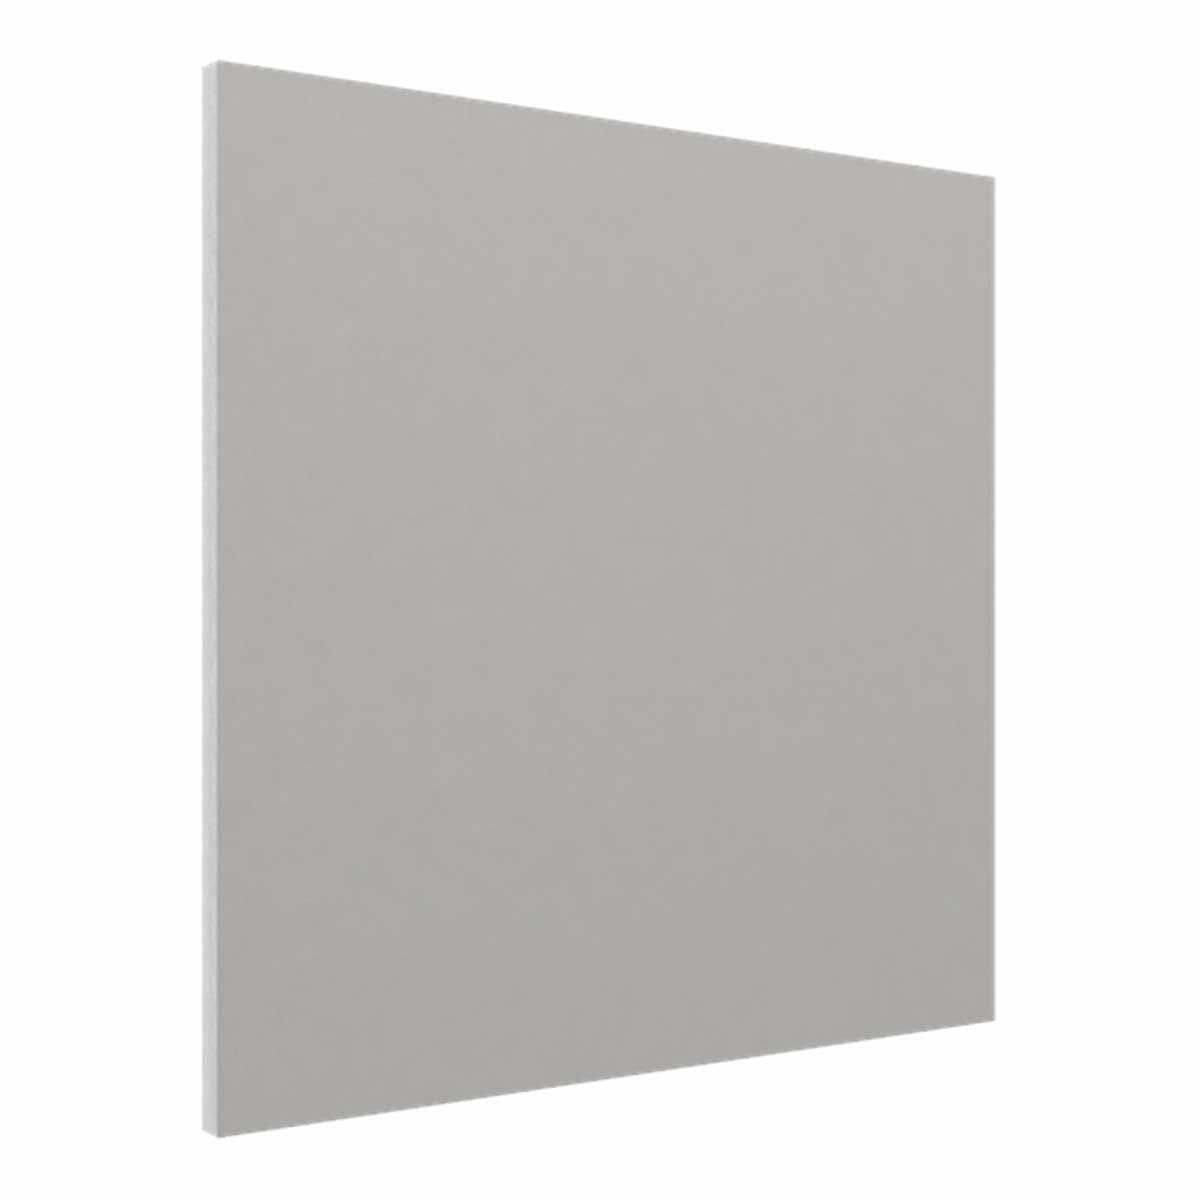 Vicoustic Flat Panel VMT, Square, Light Grey